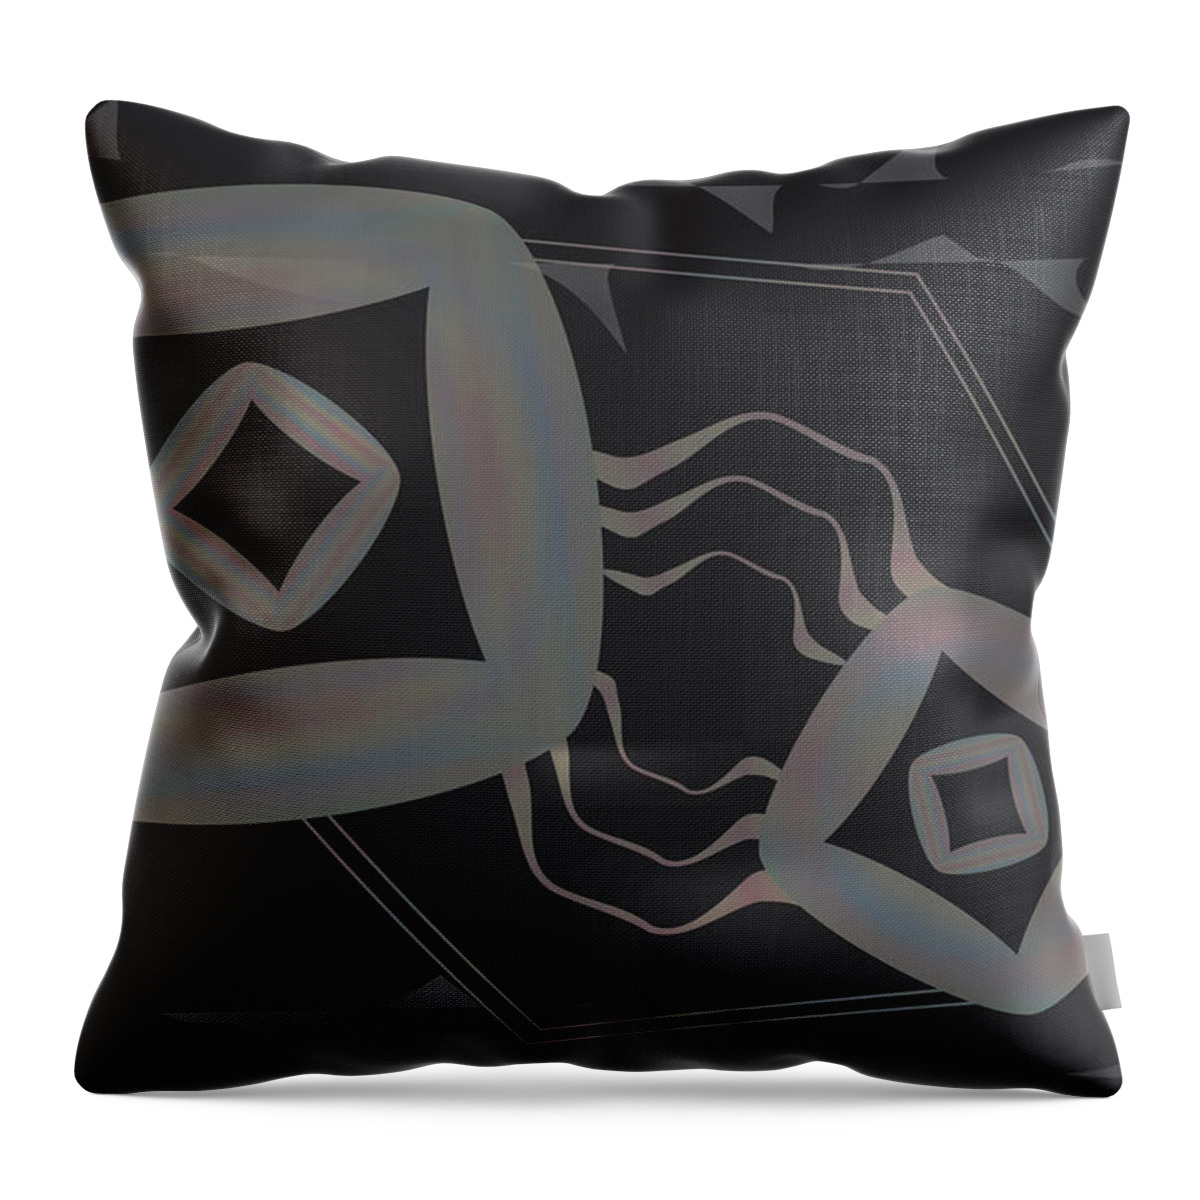 Locket Throw Pillow featuring the digital art Chromoid by Kevin McLaughlin